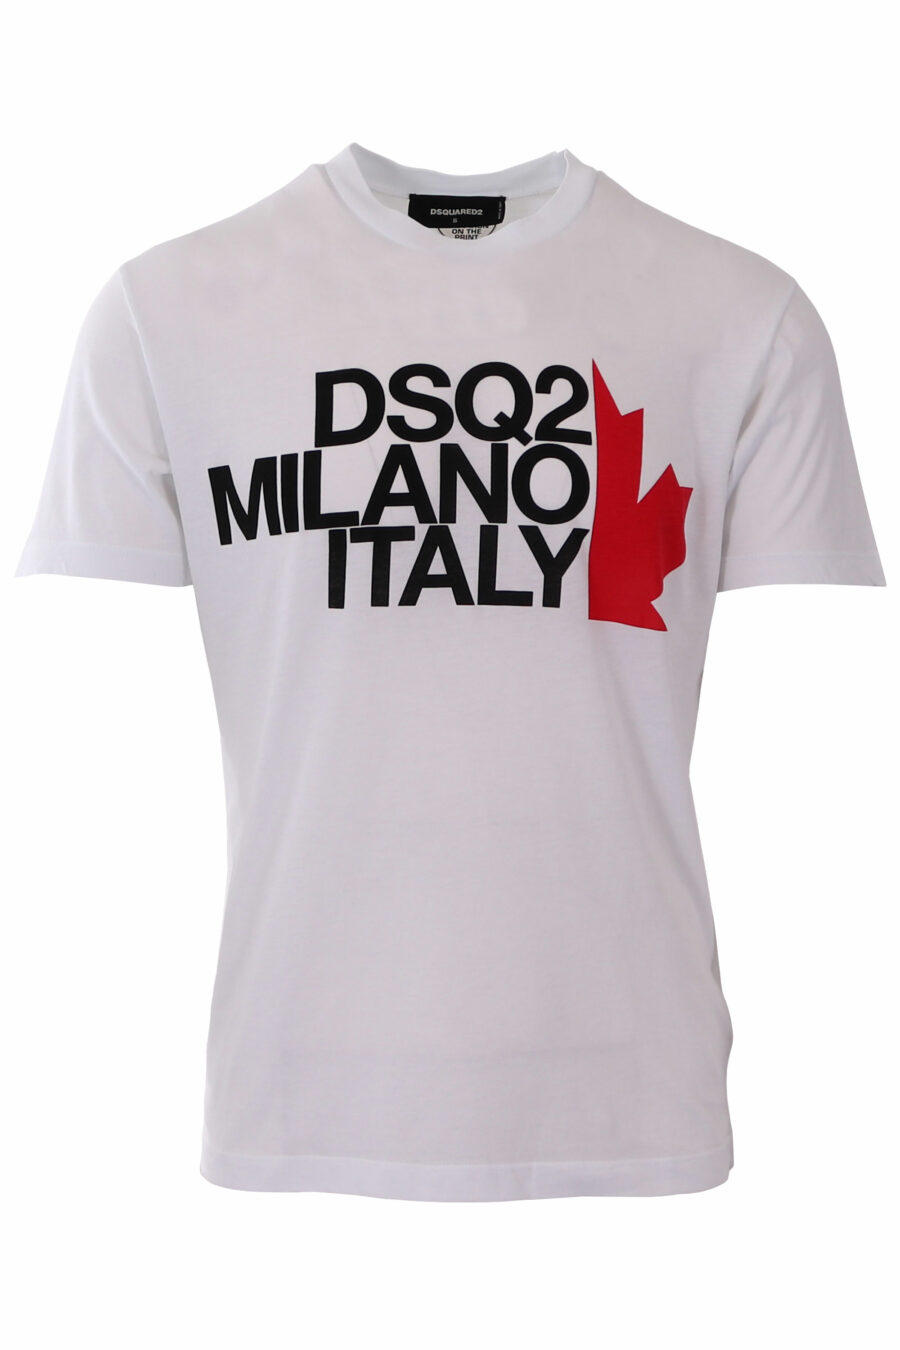 Camiseta blanca con maxilogo "milano italy" - IMG 1842